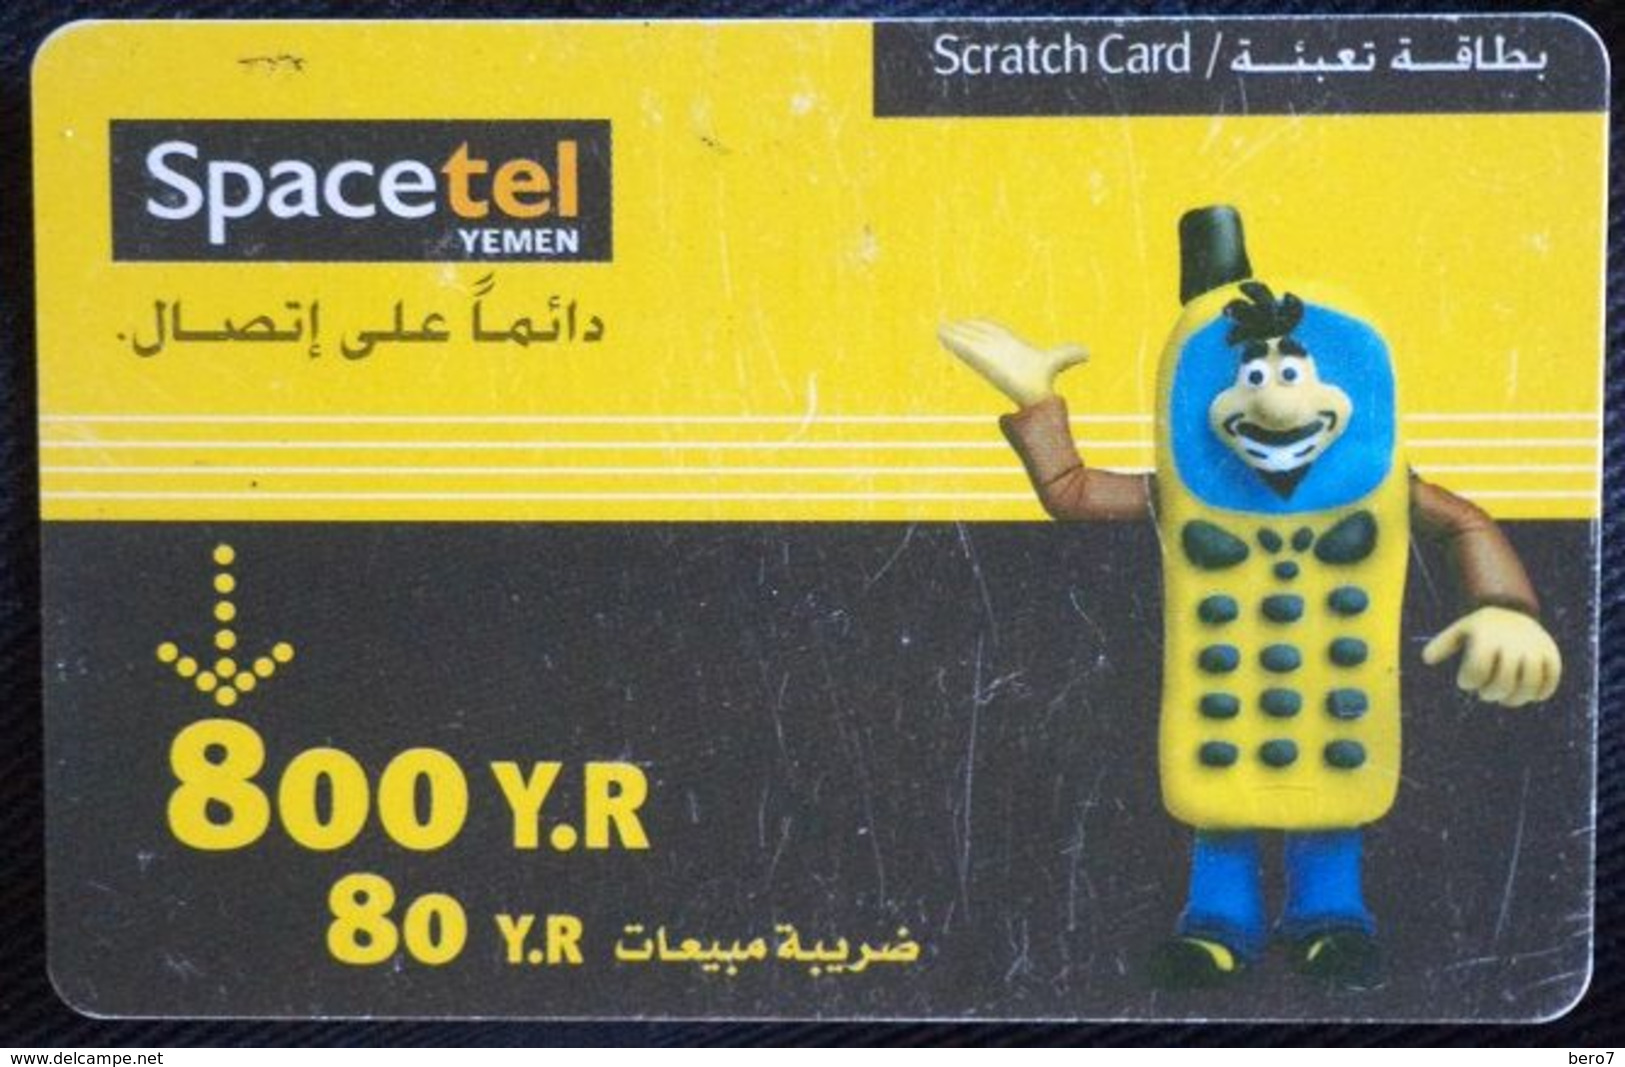 YEMEN- 800 Y.R Spacetel Scratch Card [USED] - Yemen